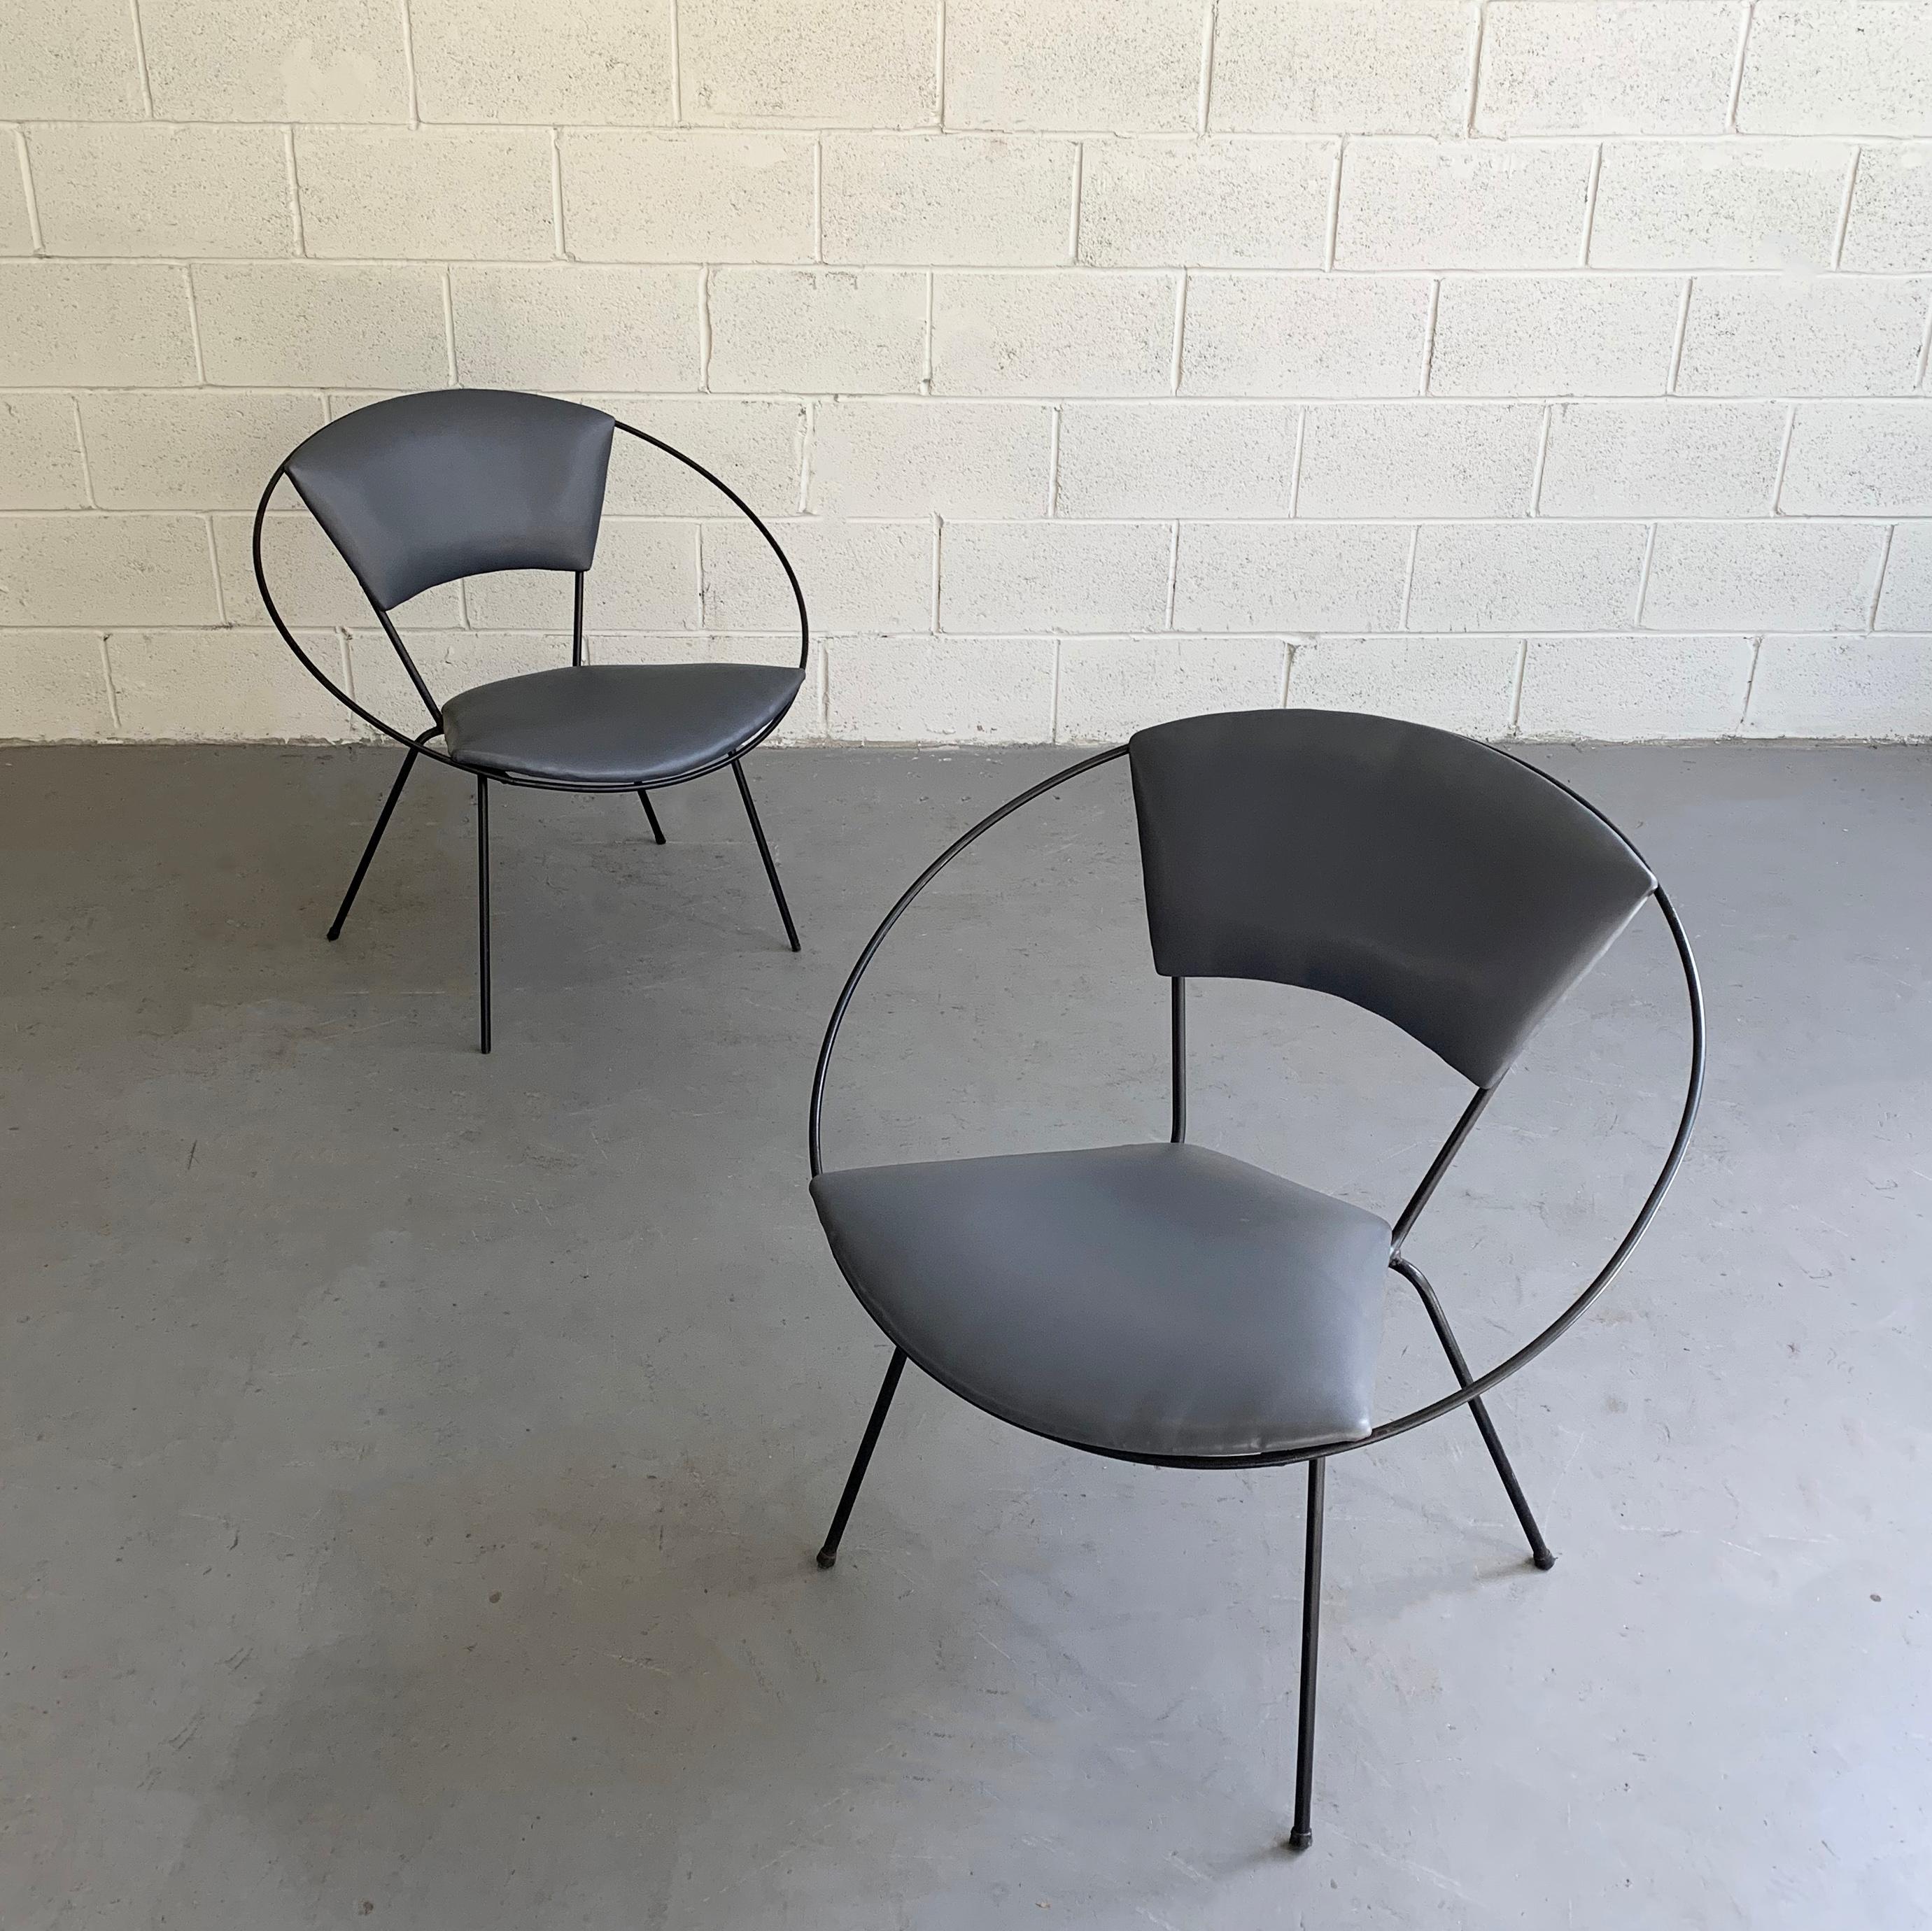 Pair of atomic, mod, Mid-Century Modern, wrought iron, hoop chairs upholstered in deep aubergine, gray vinyl.